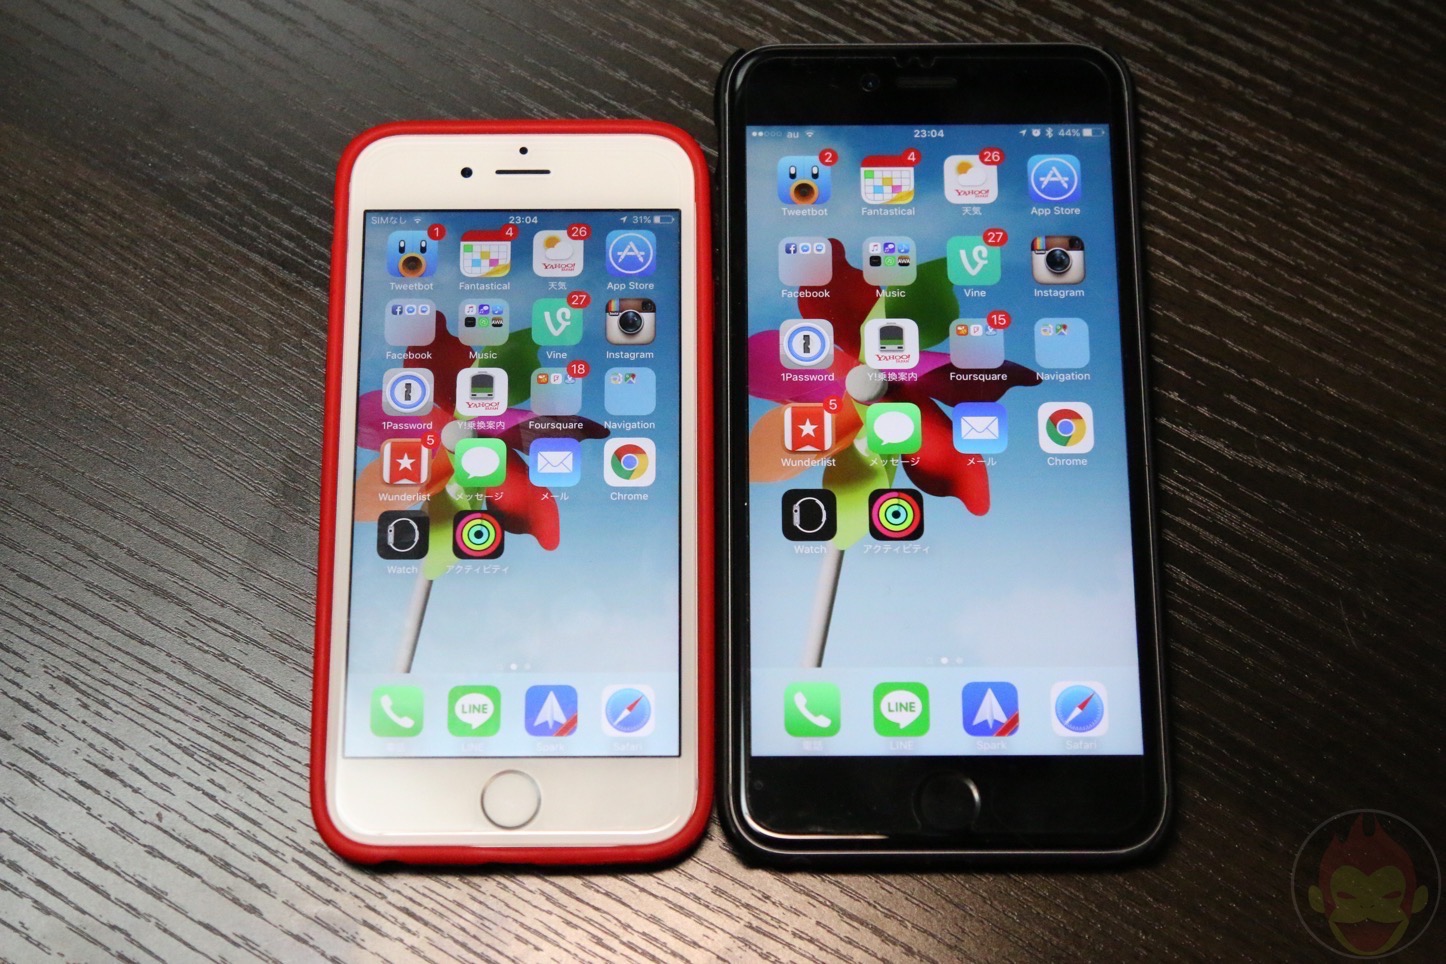 iPhone6s-6splus-comparison-benchmark-tests-37.JPG